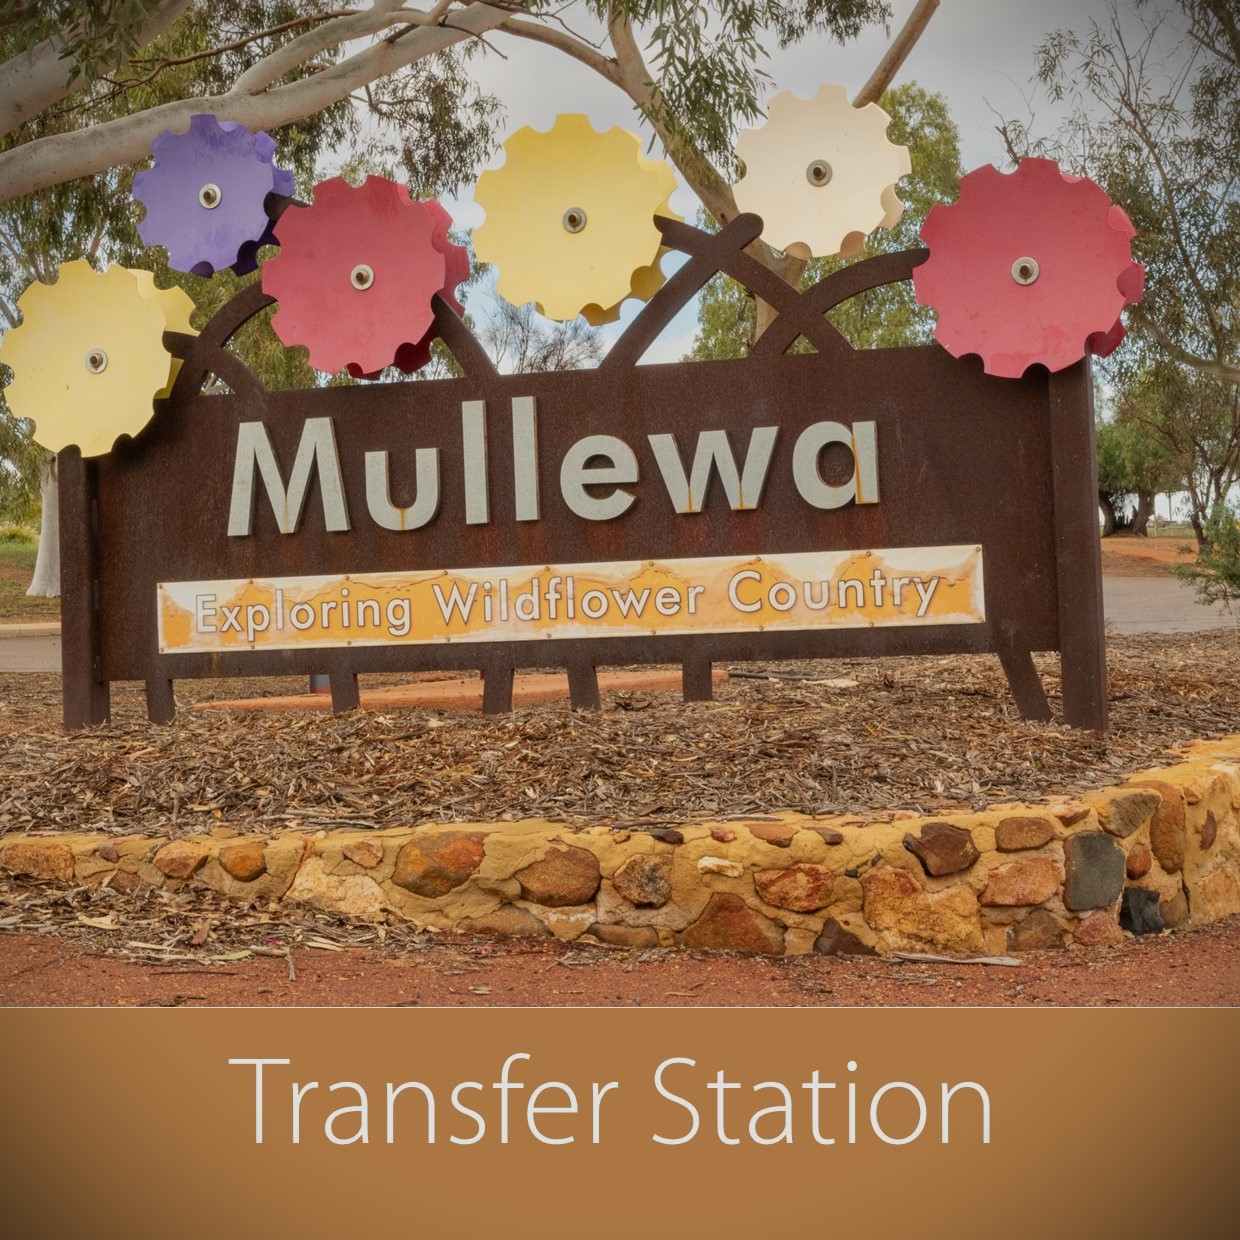 Mullewa Transfer Station